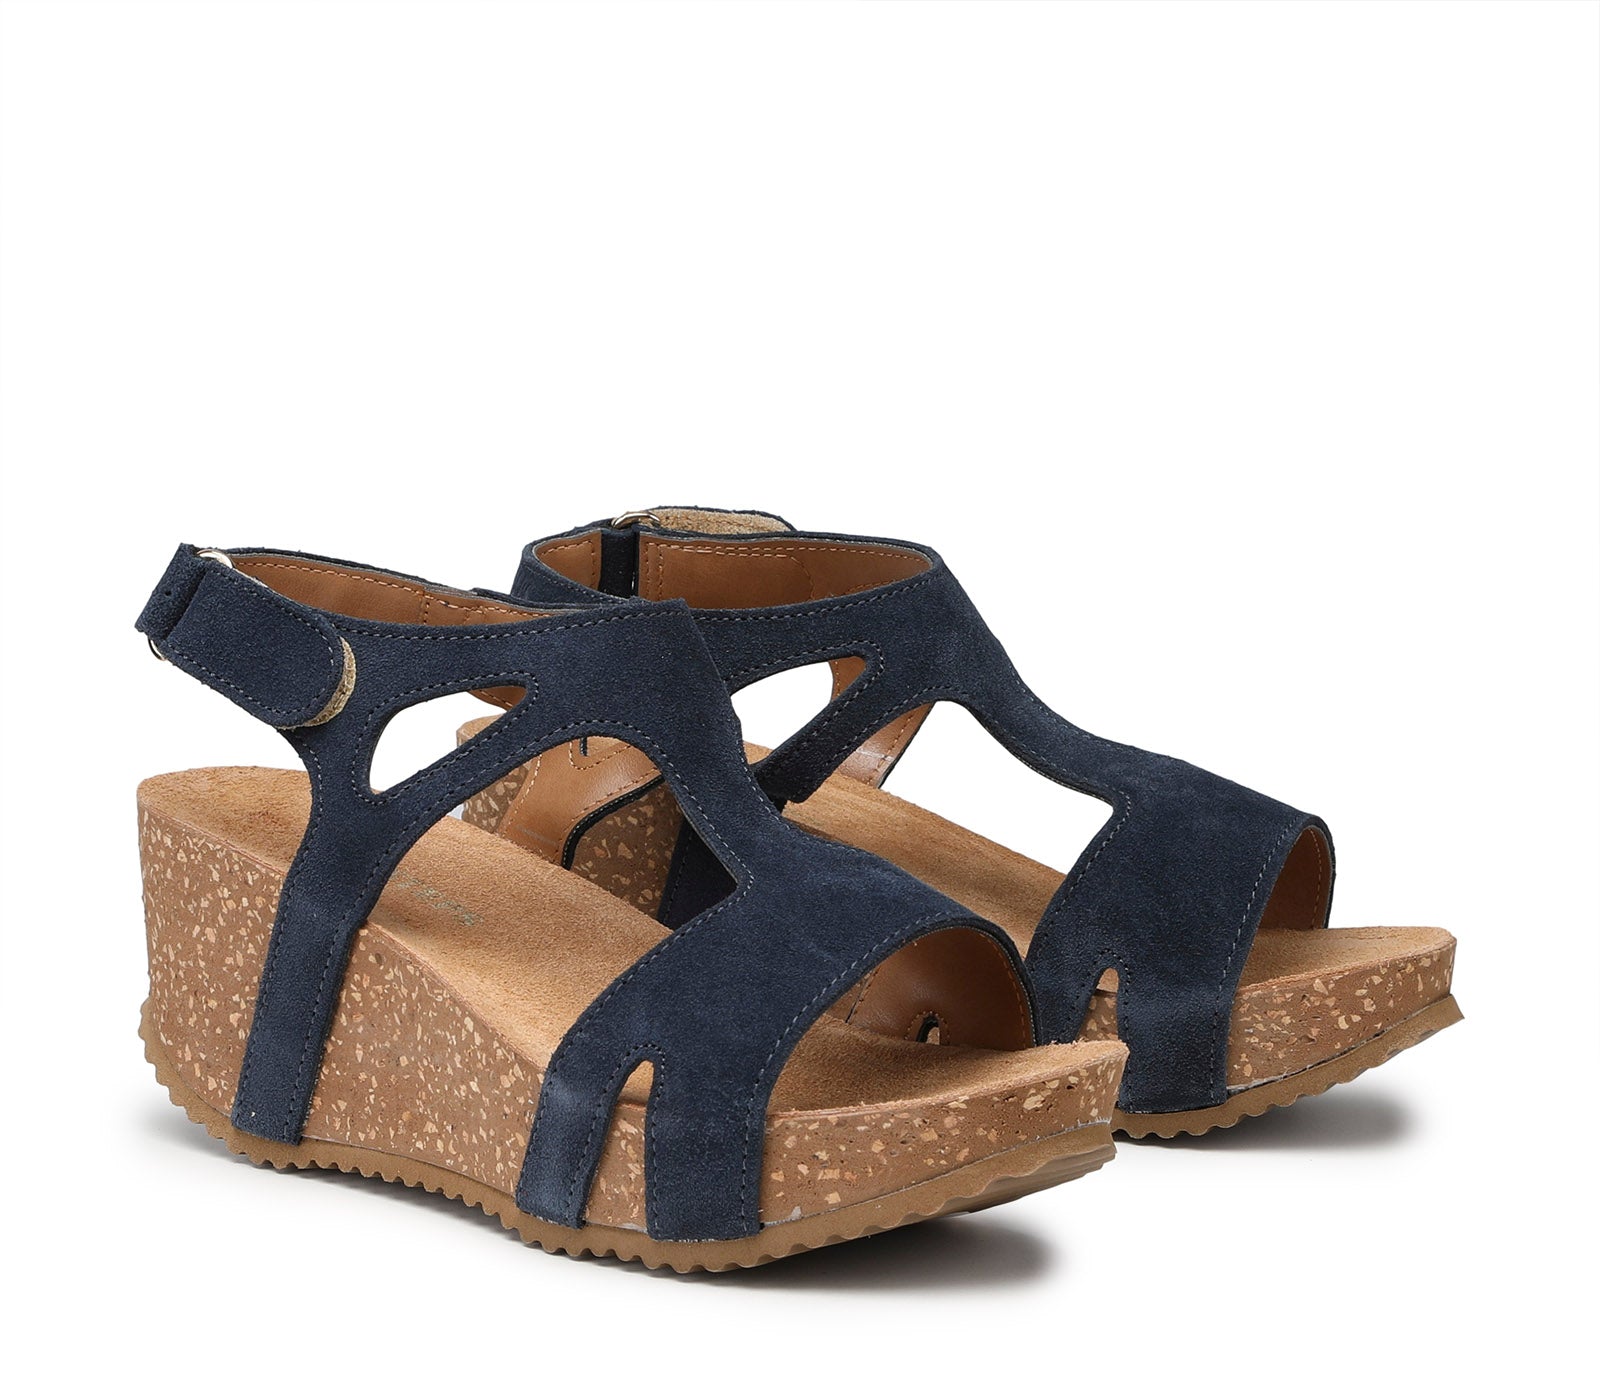 Midnight blue Docksteps women's wedge sandals